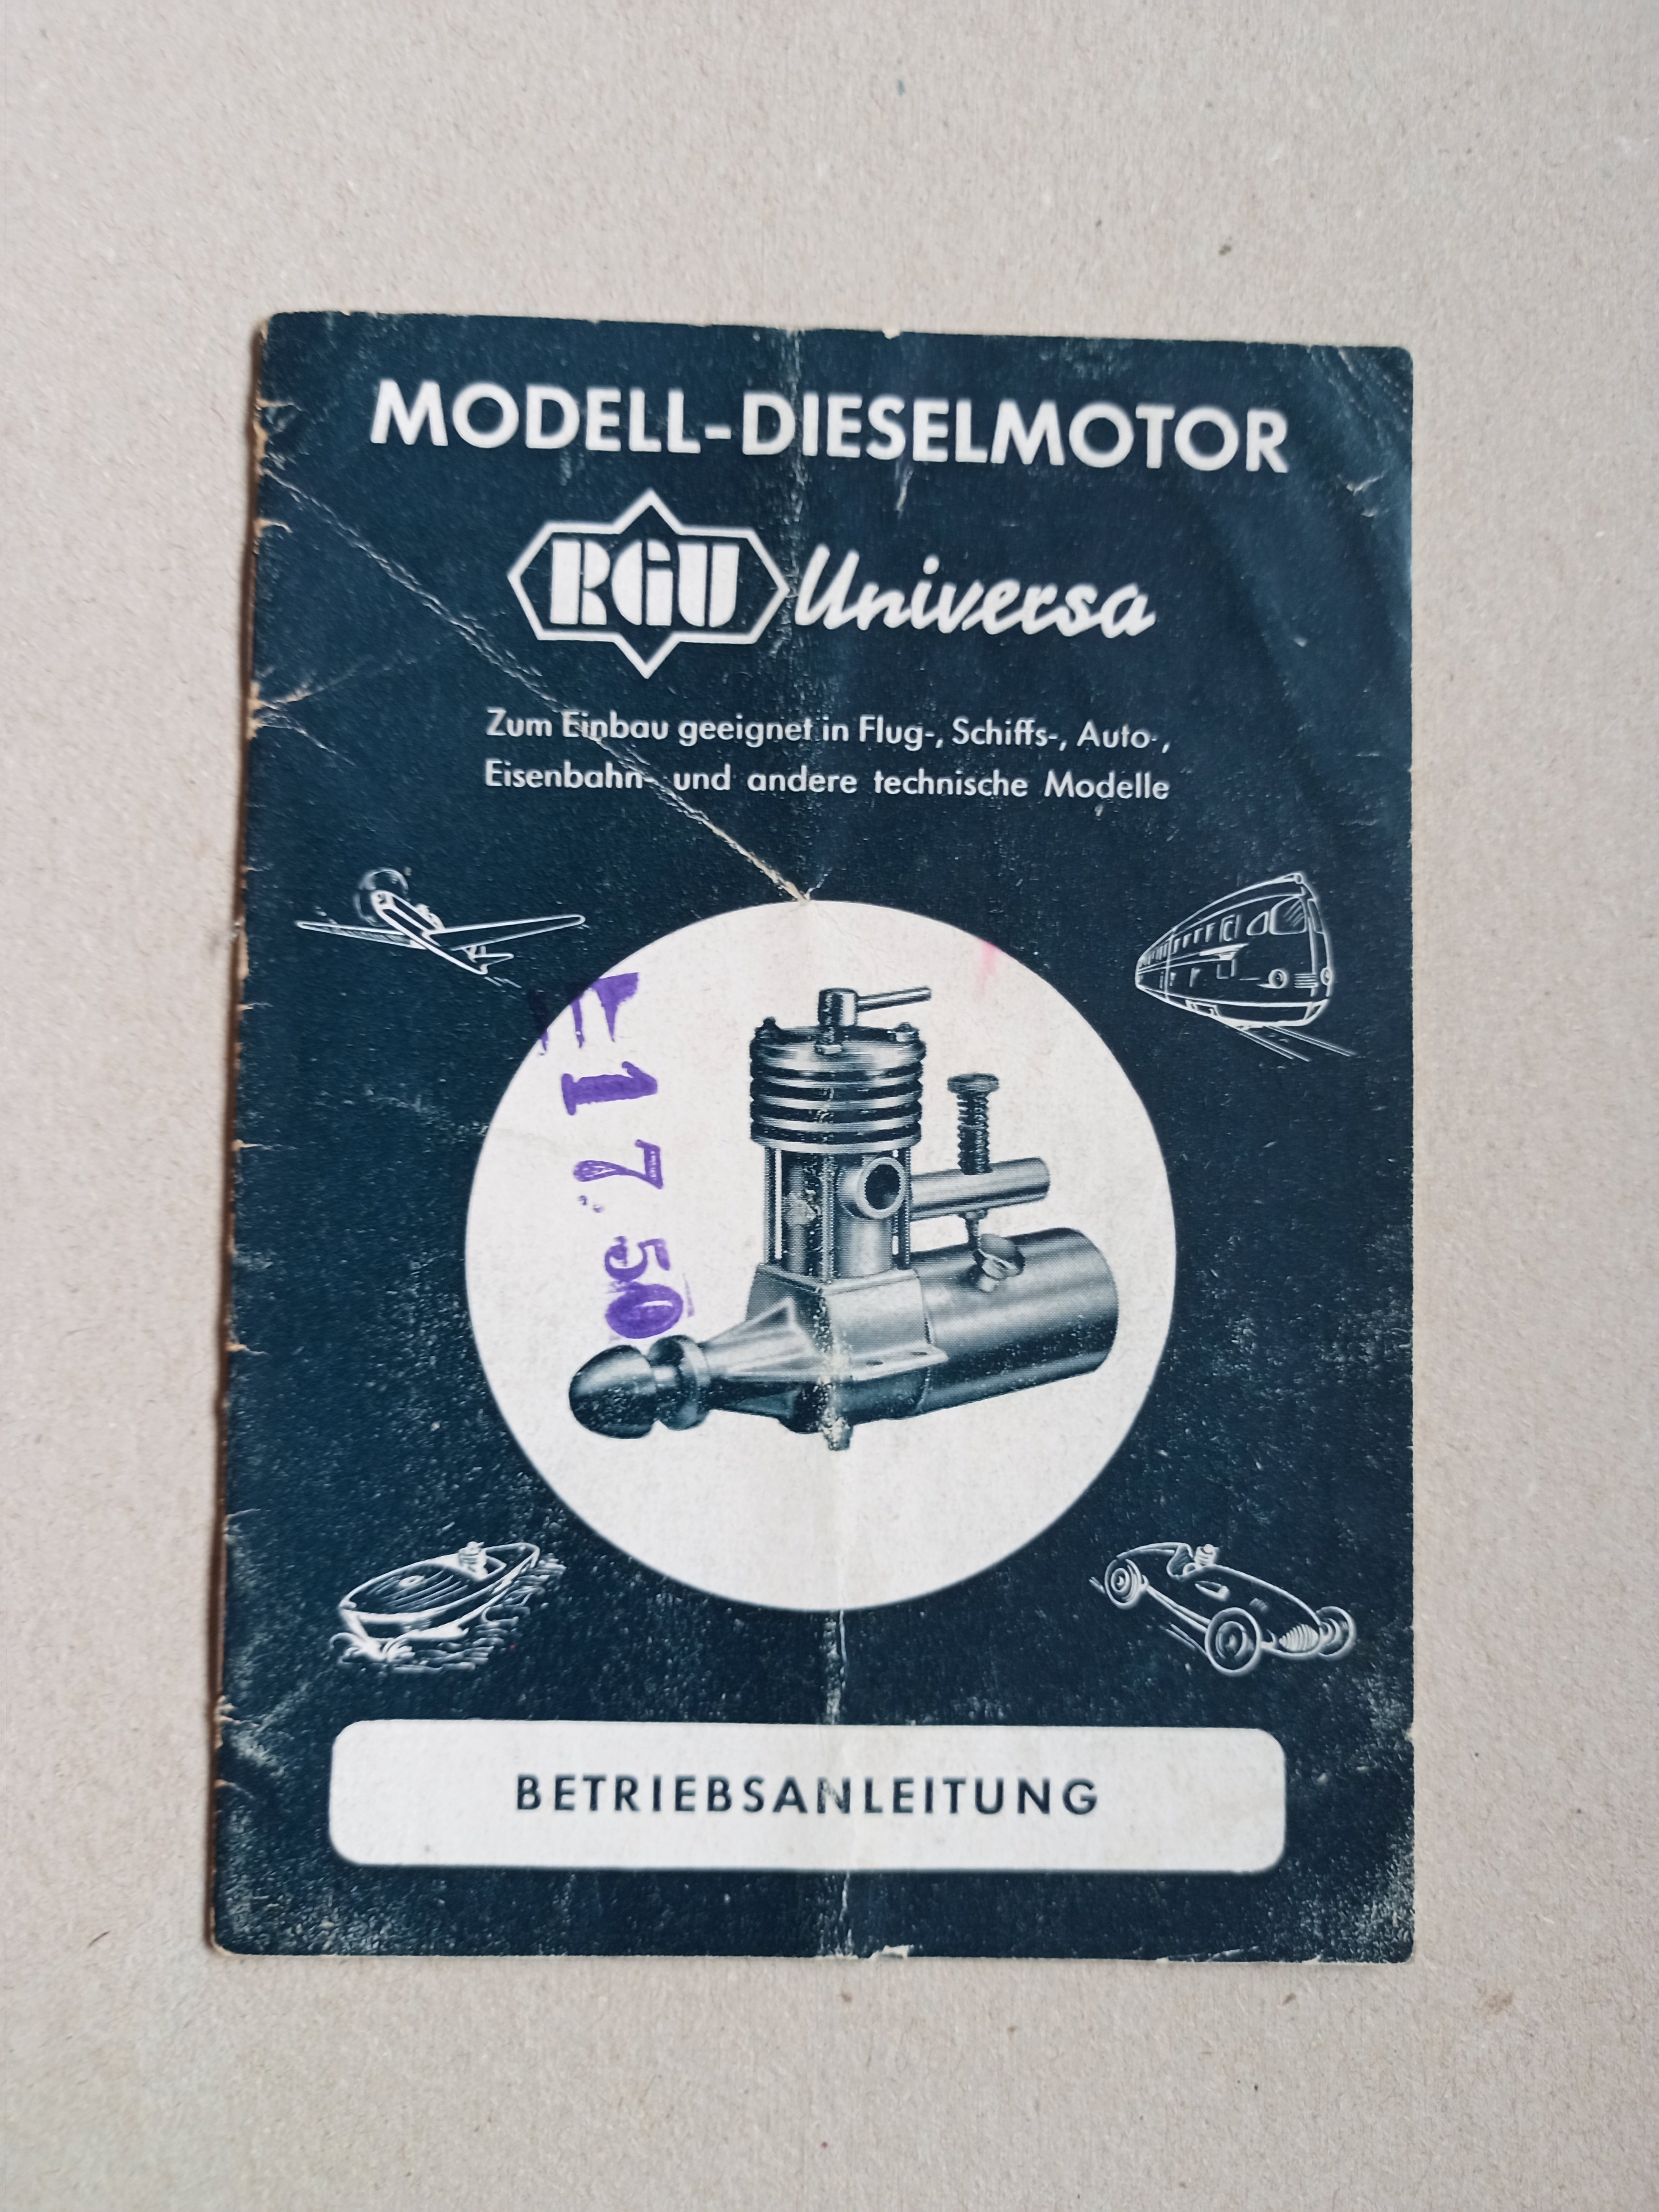 Betriebsanleitung RGU-Universa Dieselmotoren (Deutsches Segelflugmuseum mit Modellflug CC BY-NC-SA)